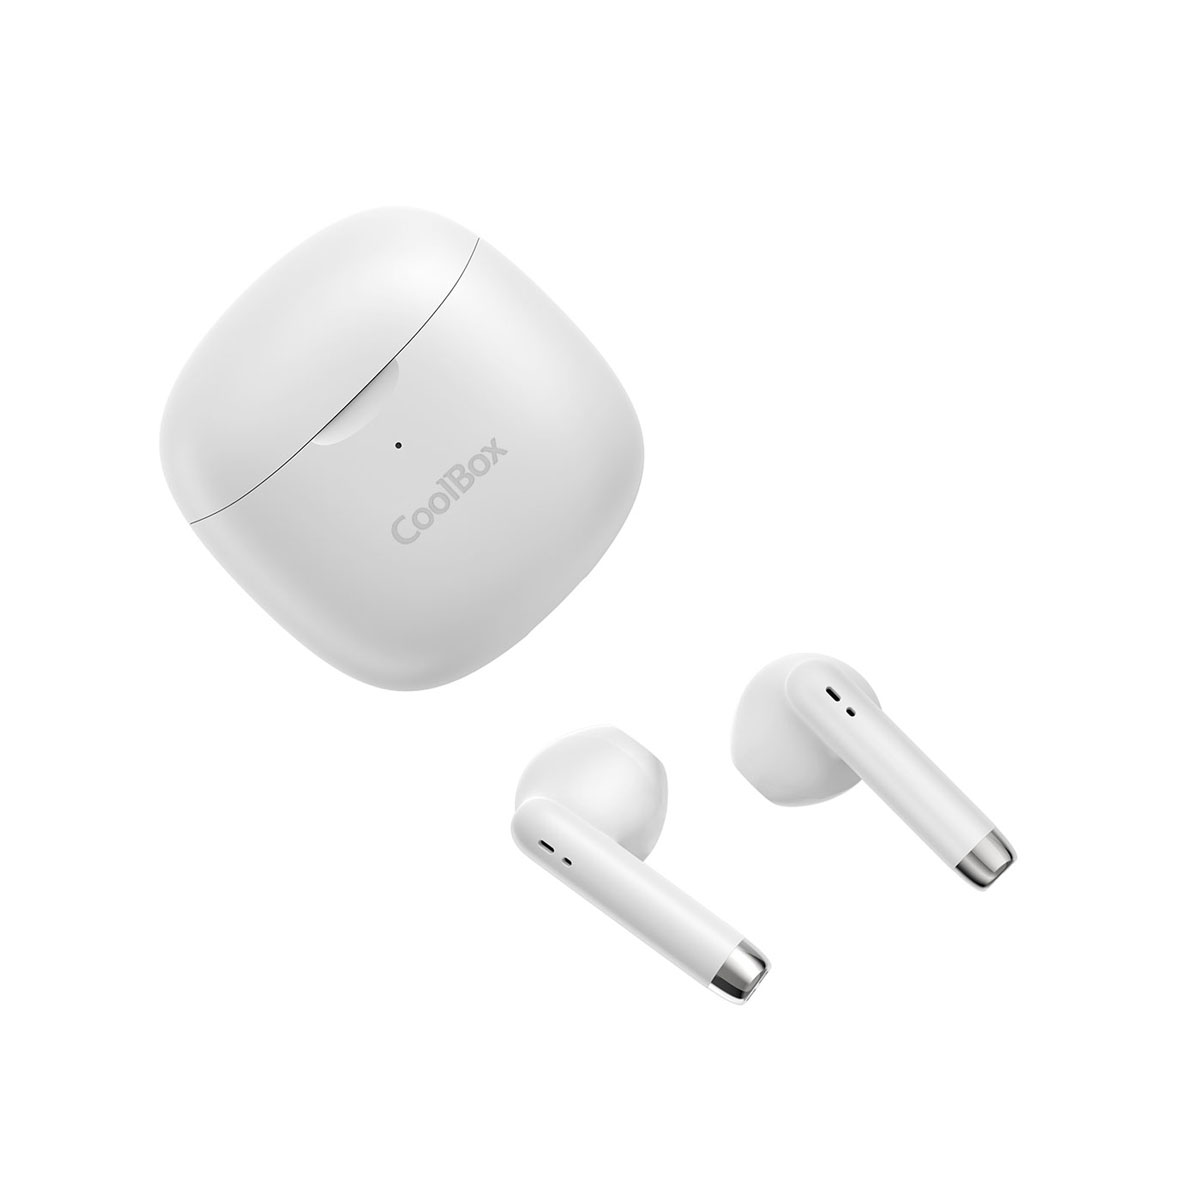 COOLBOX TWS-01, In-ear Bluetooth Bluetooth White headphones